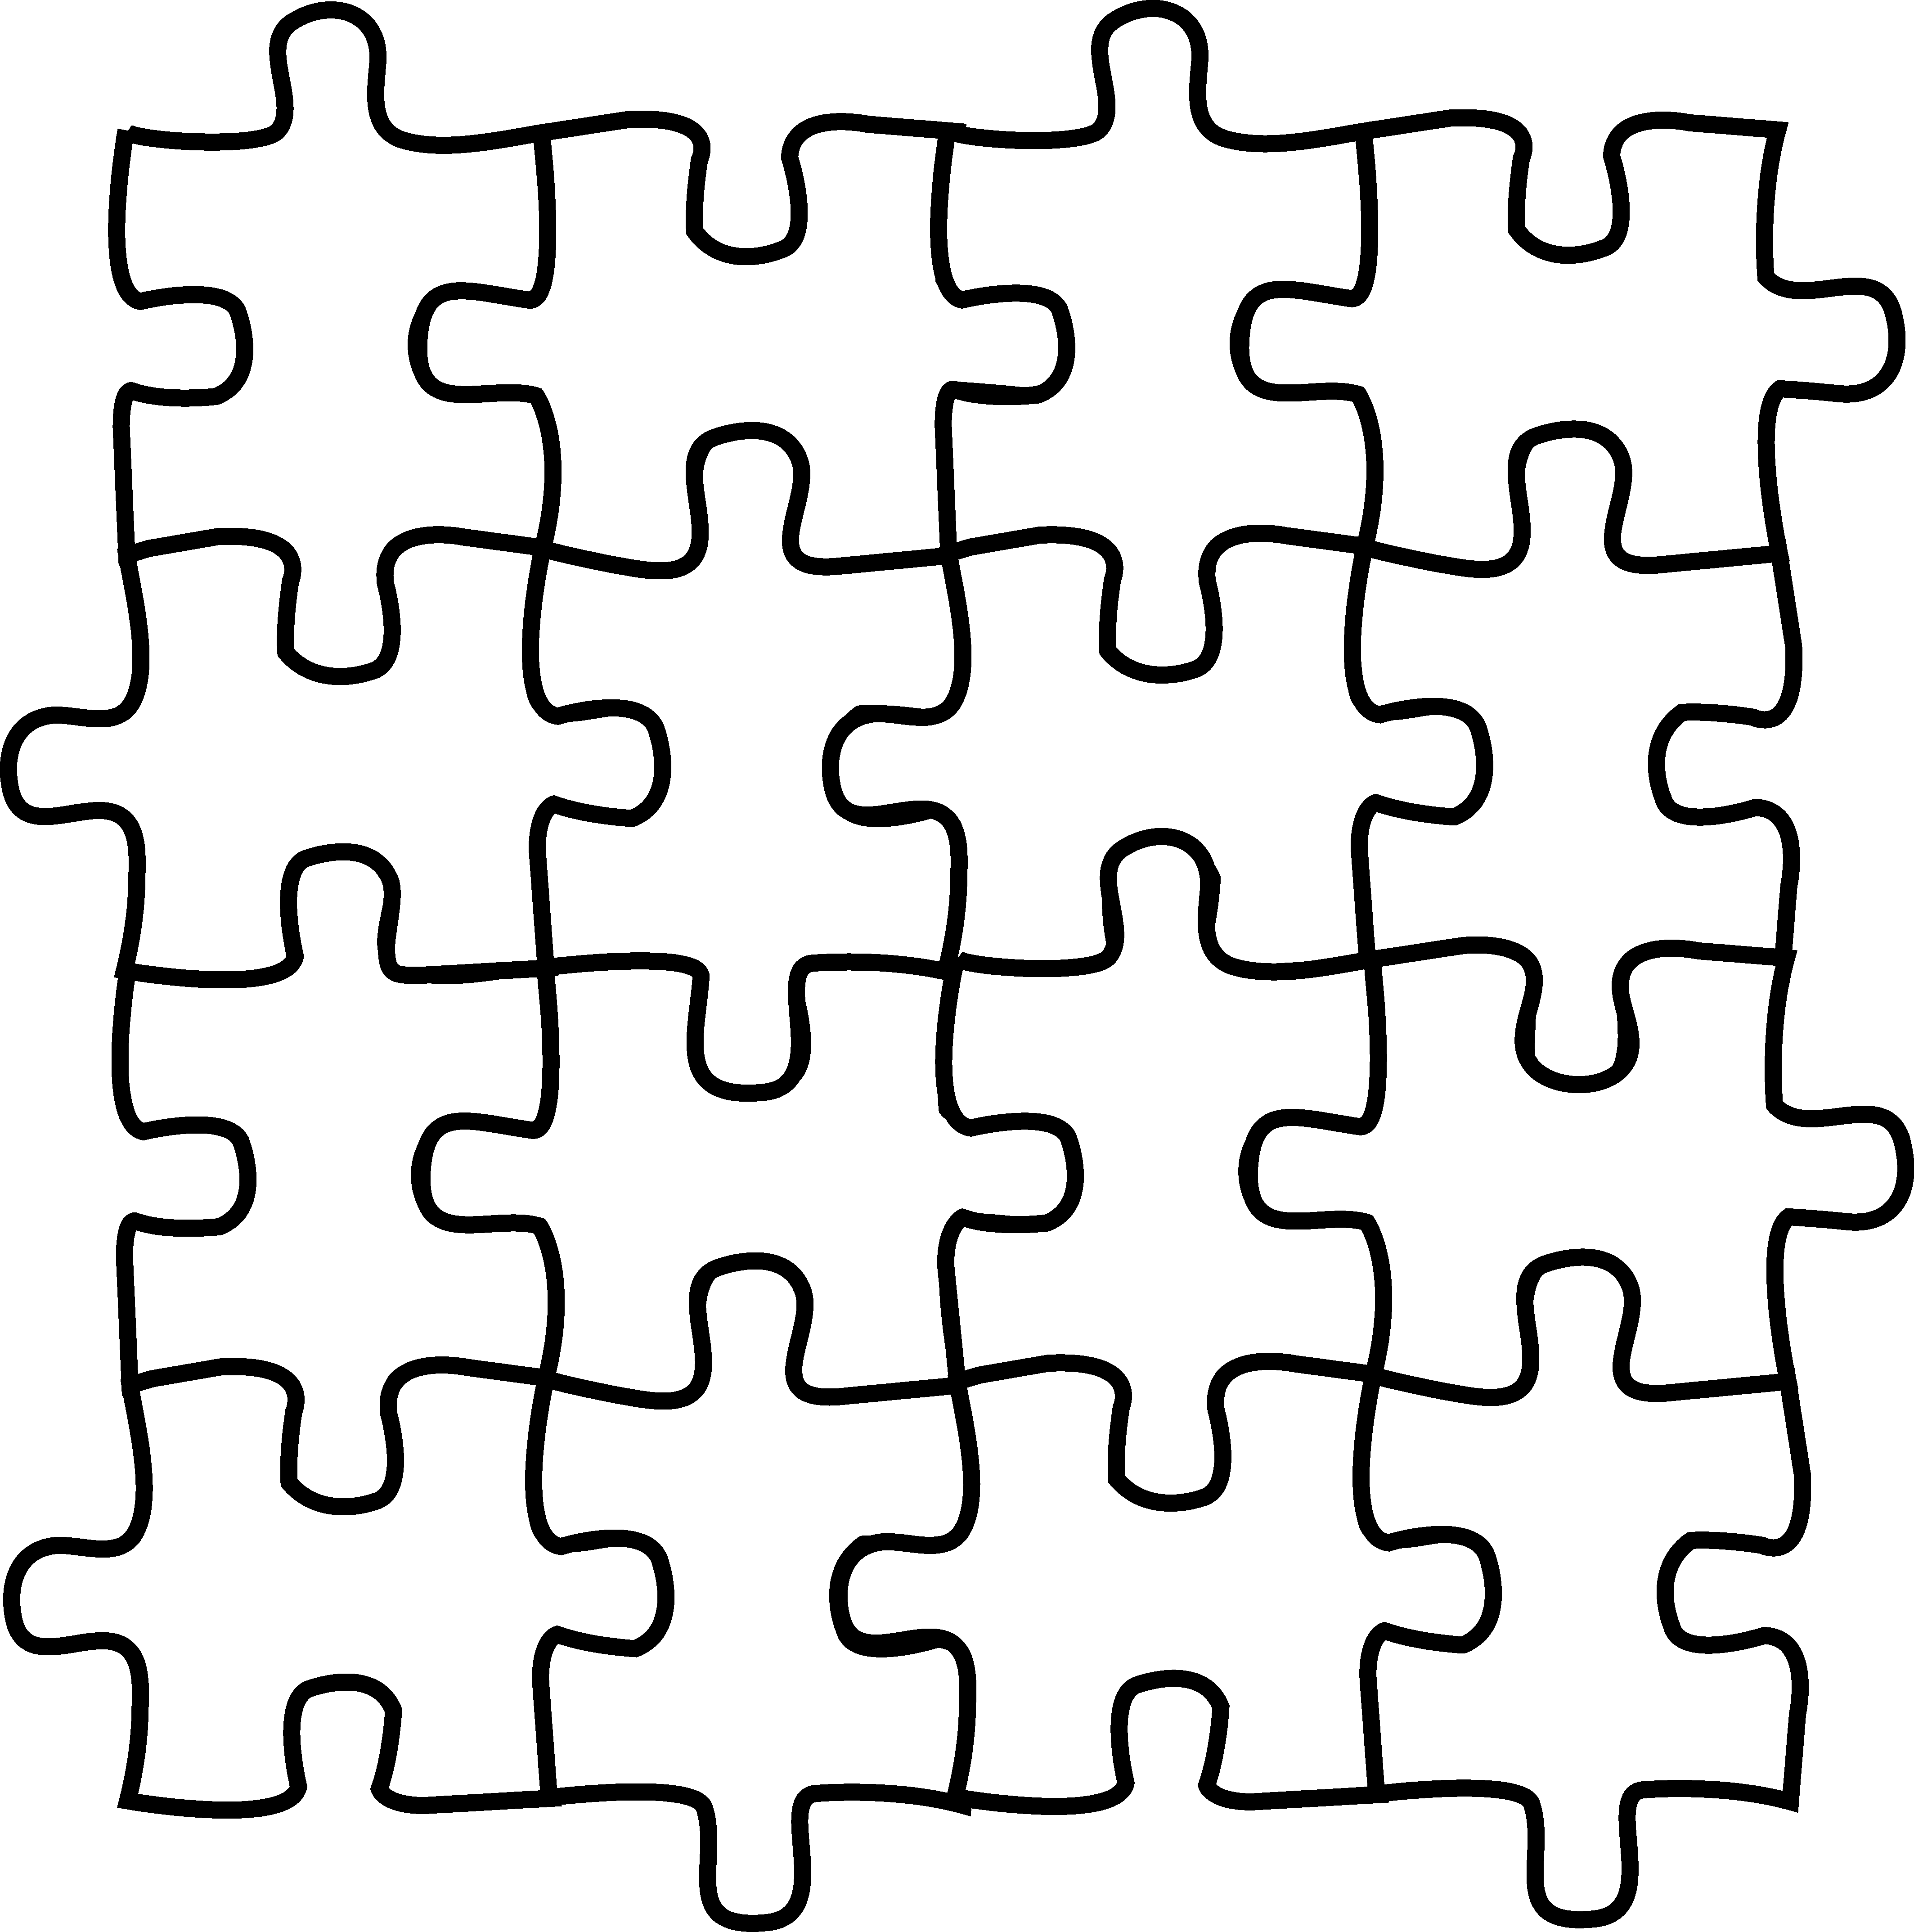 Free Vector Puzzle Pieces, Download Free Vector Puzzle Pieces png ...